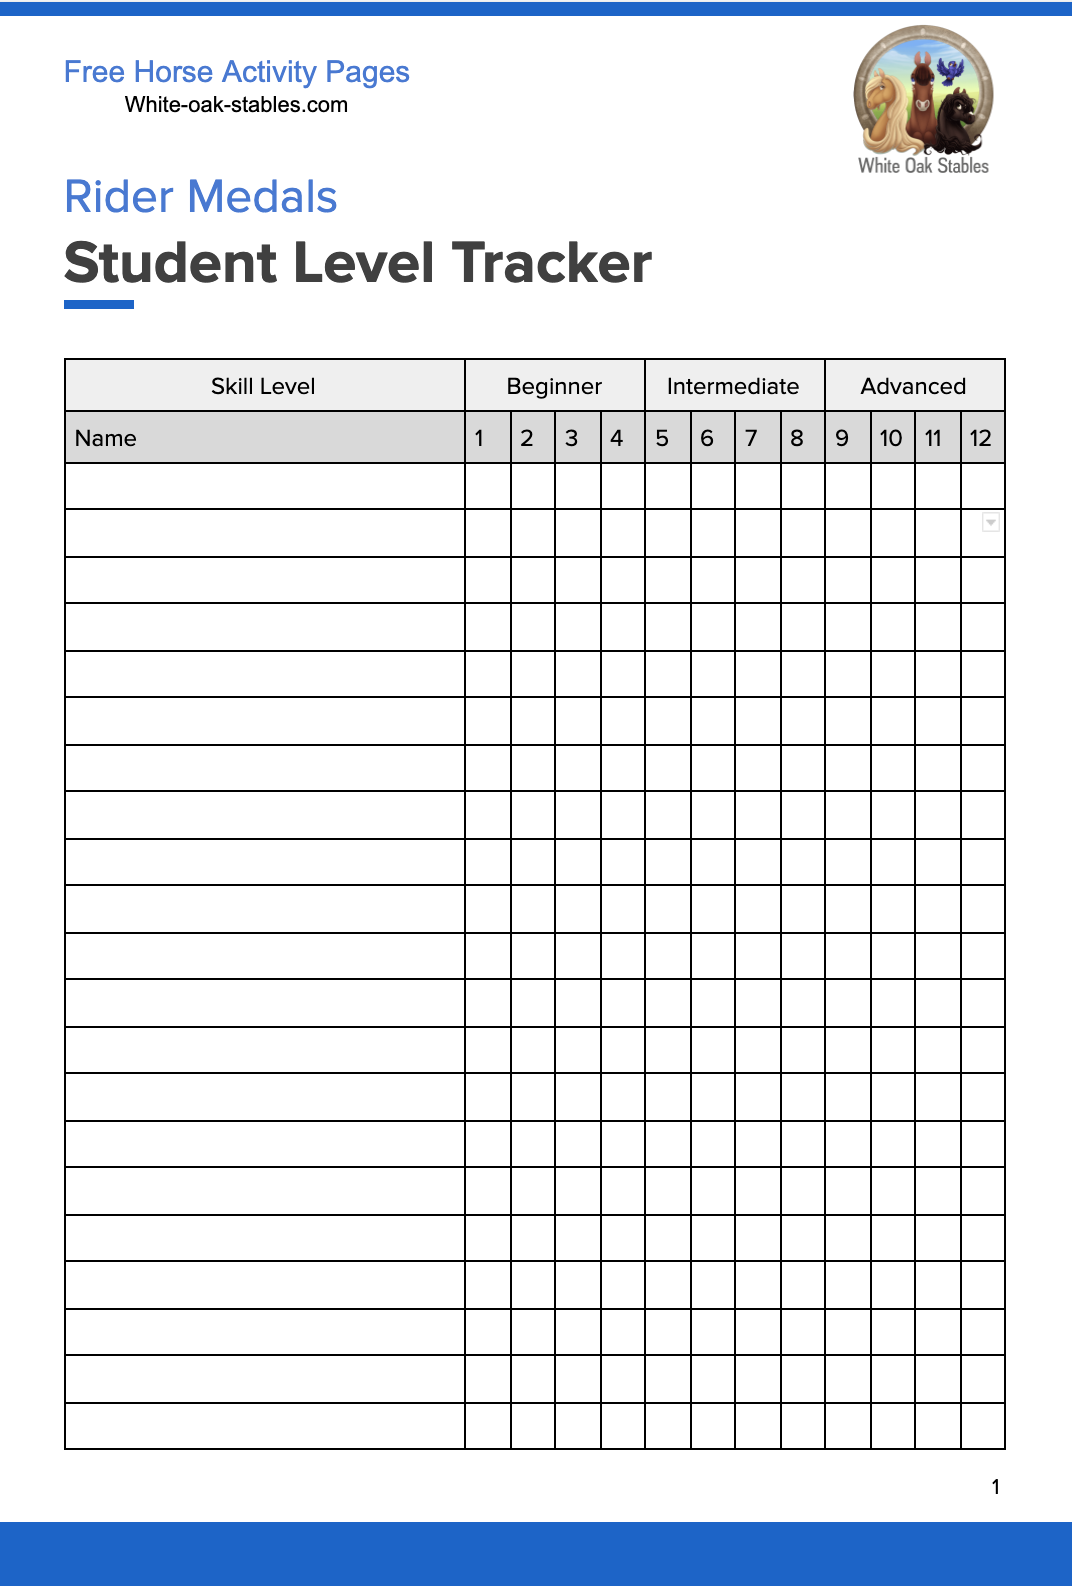 Rider Medals – Student Level Tracker